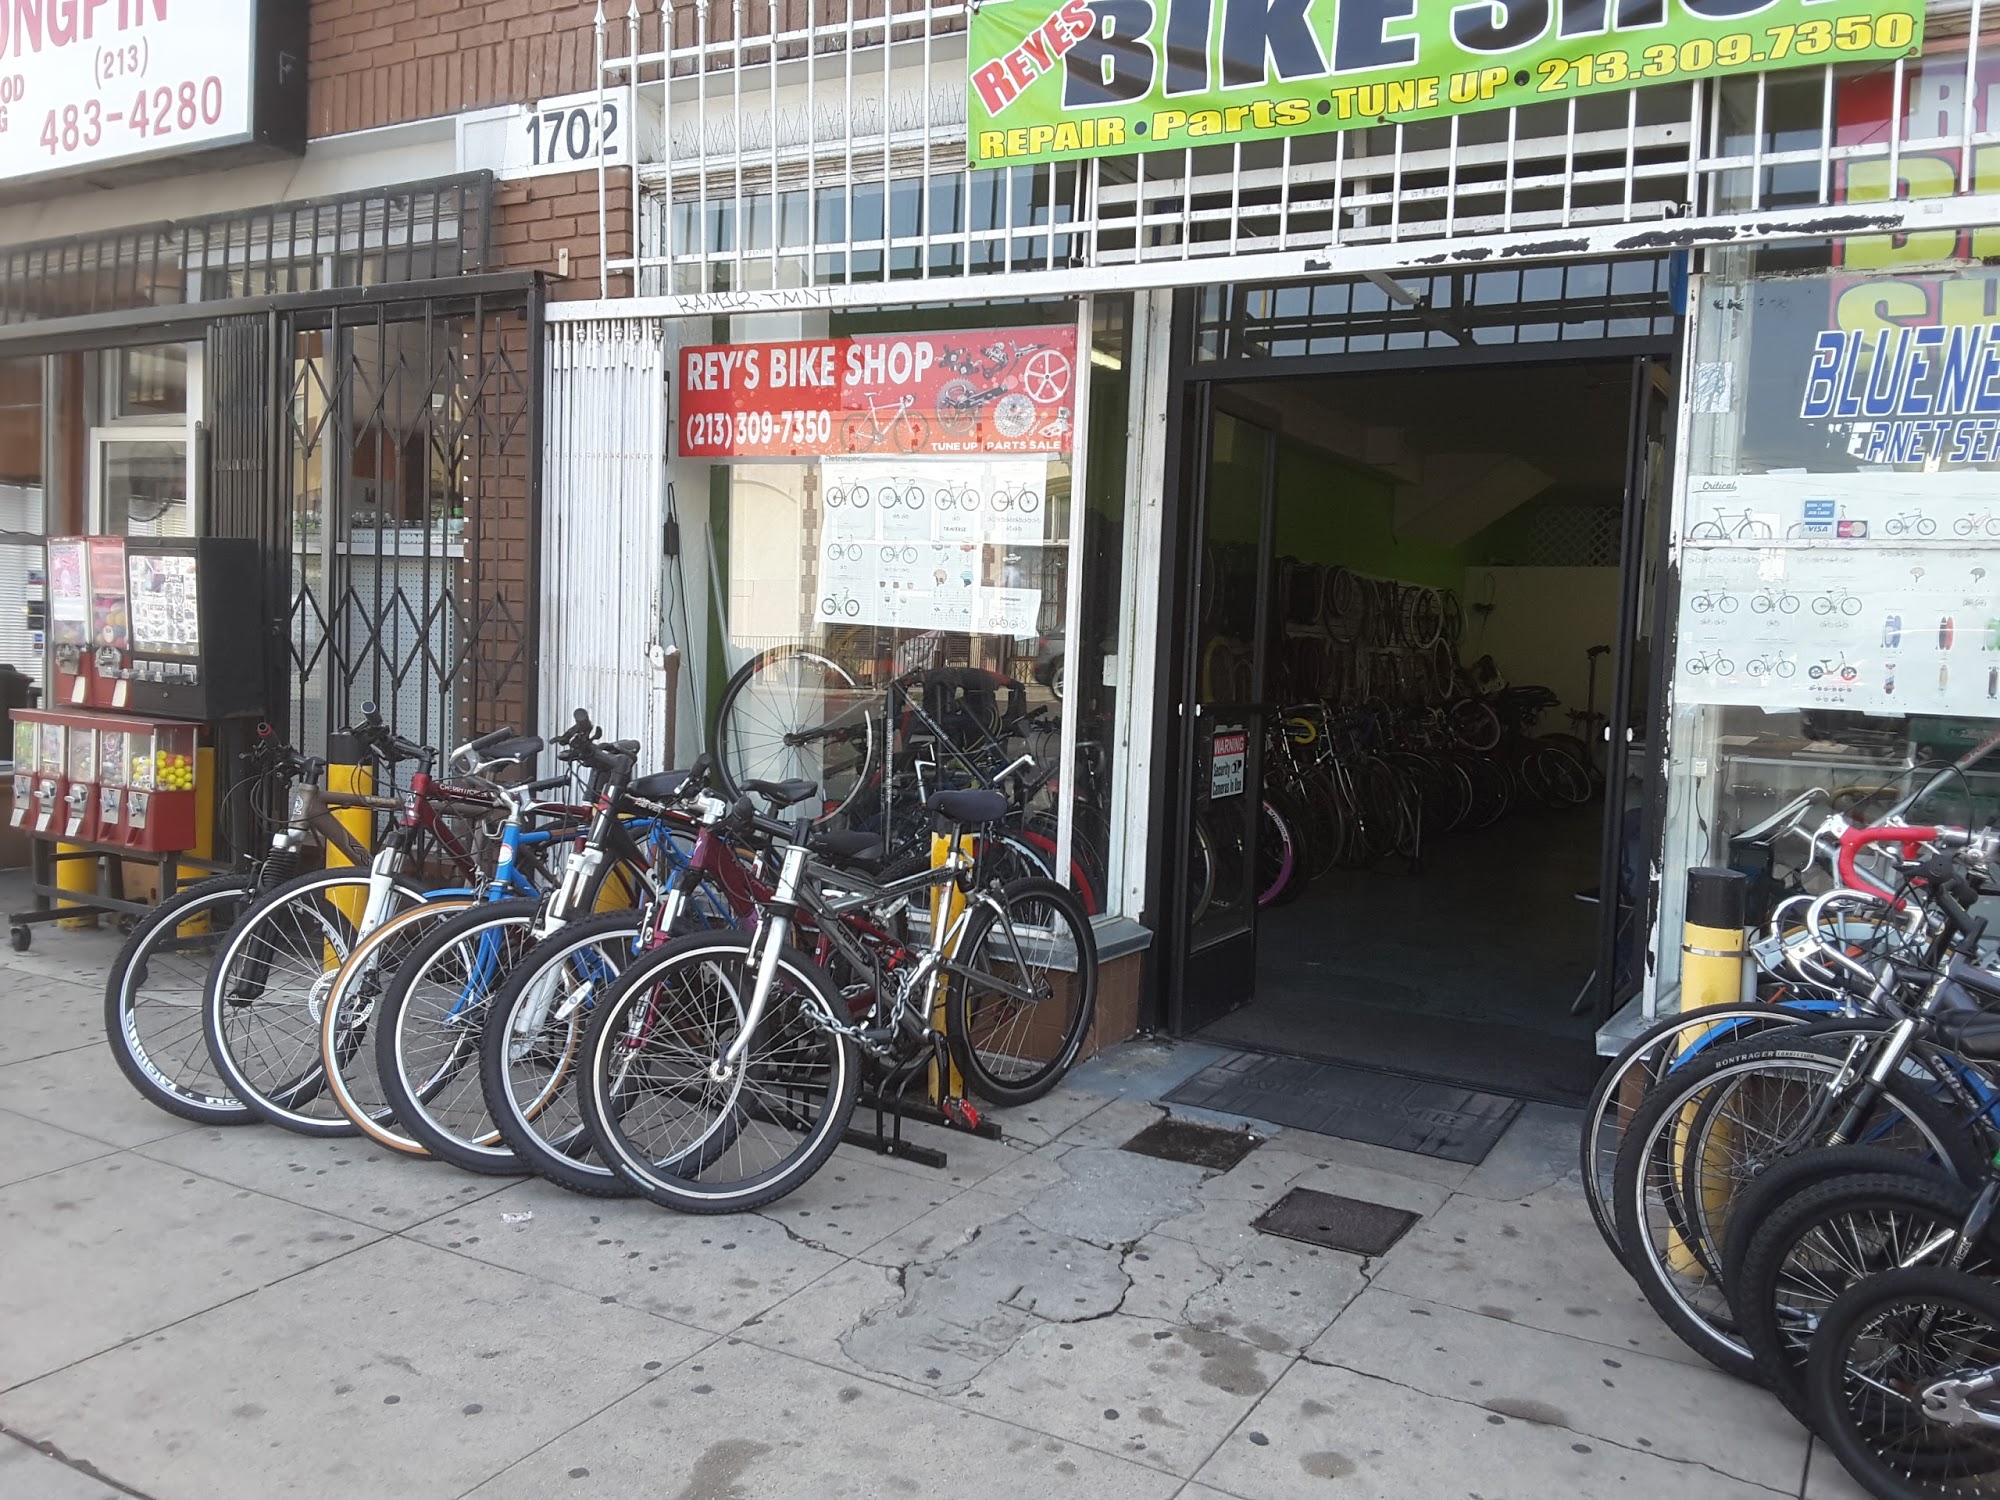 Rey's Bicycle Shop